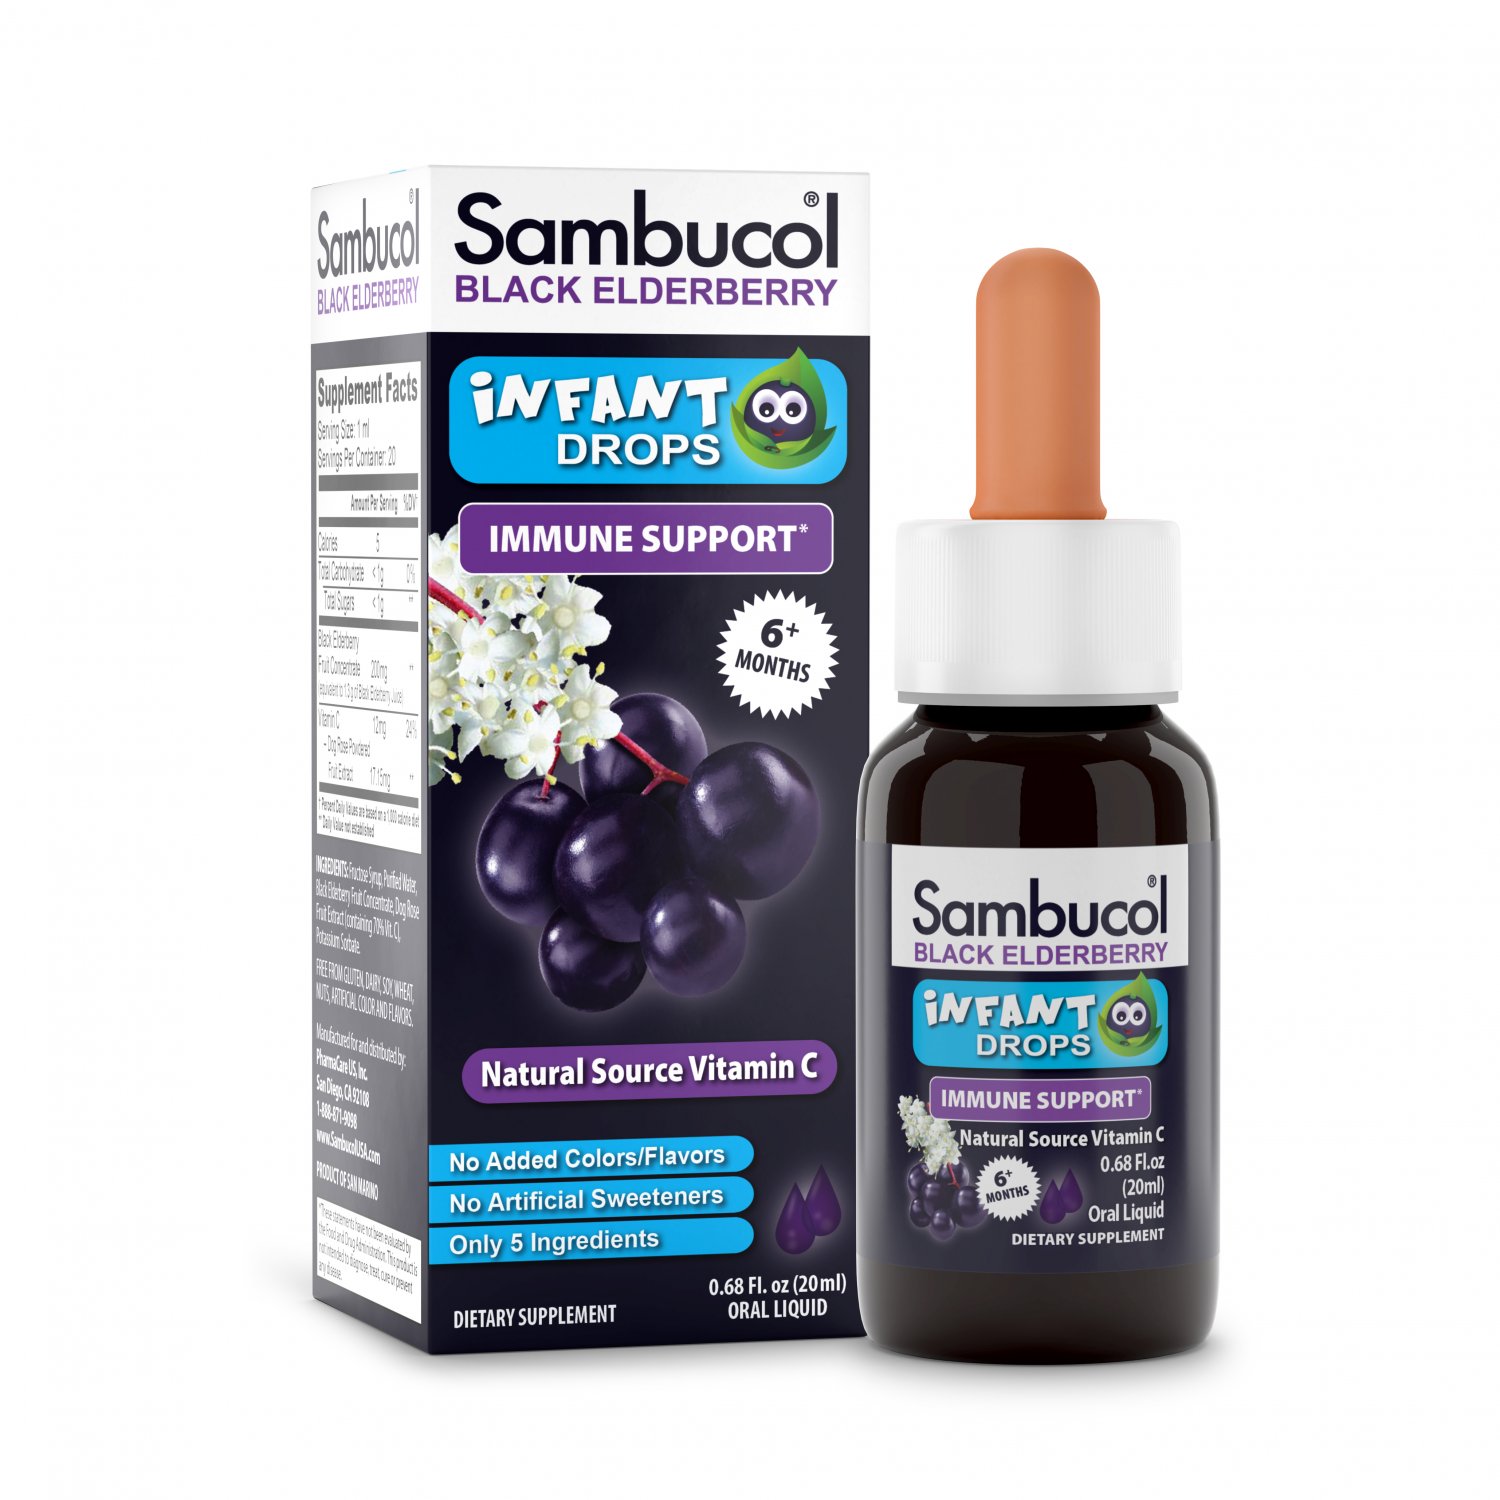 Sambucol Black Elderberry Infant Drops 0.68 oz Bottle